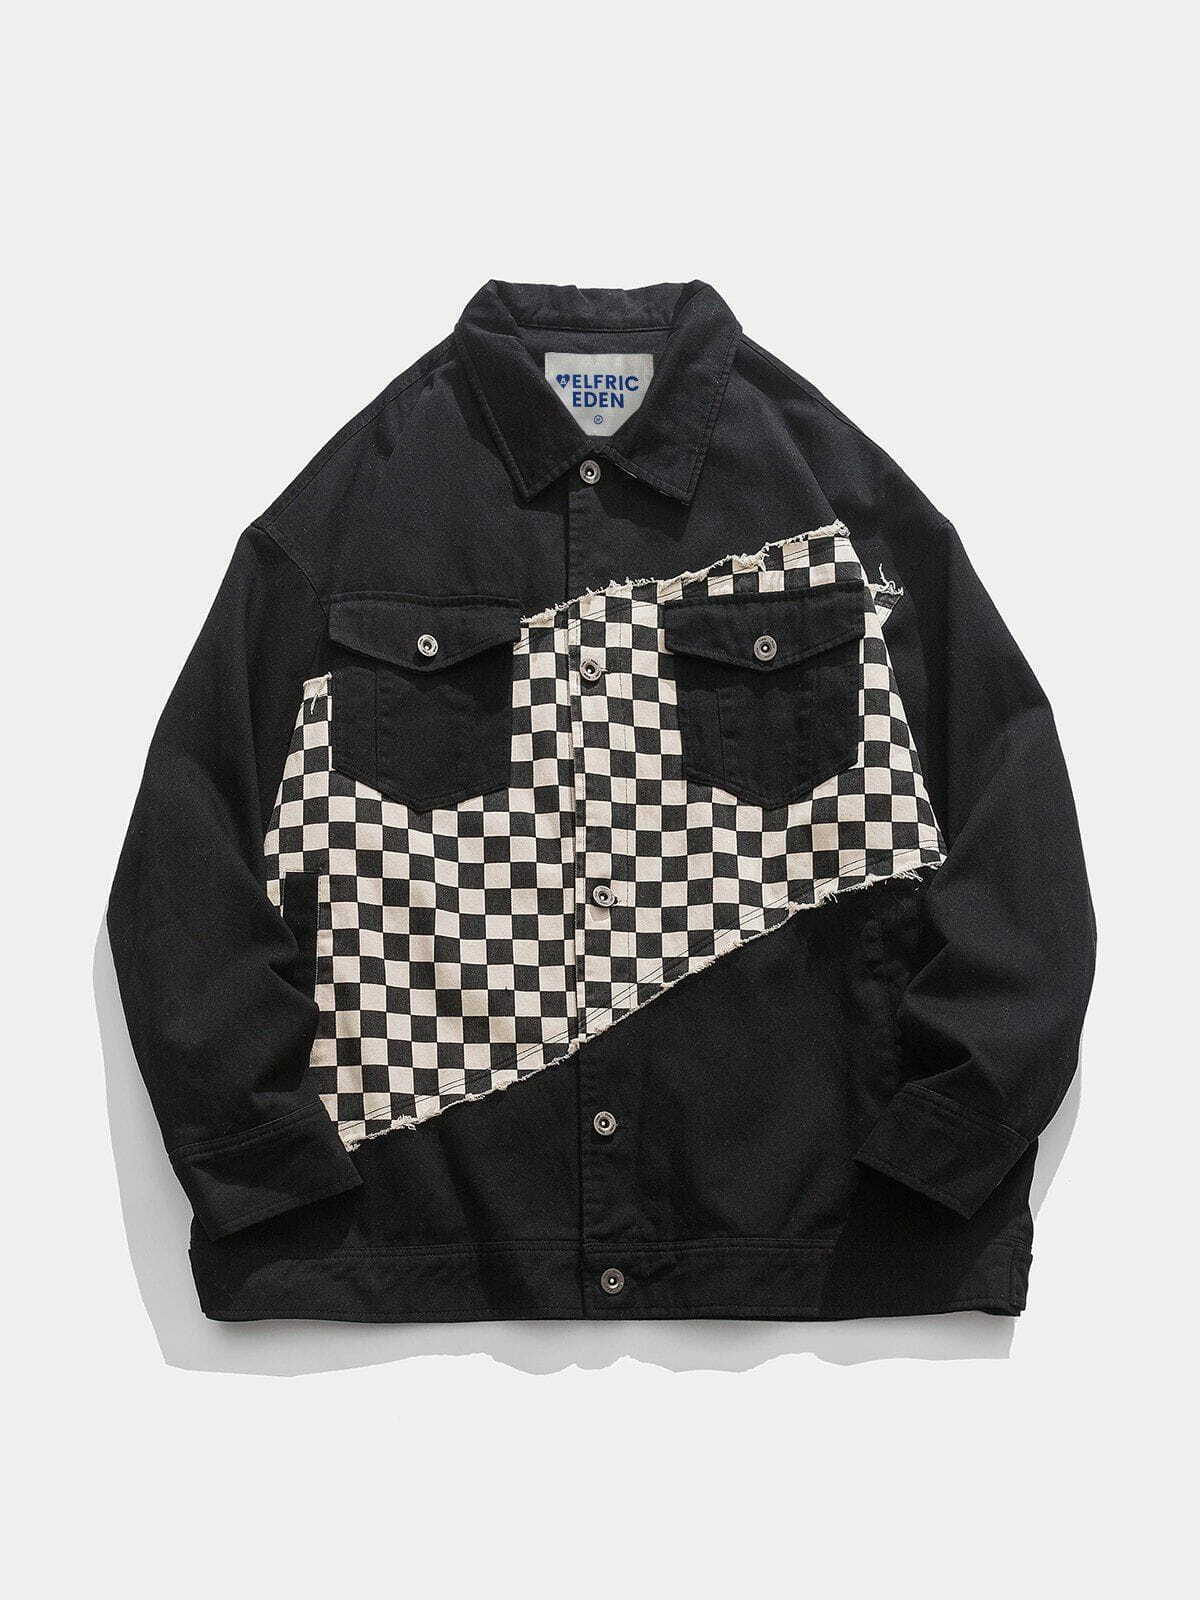 retro checkerboard jacket   eclectic patchwork design 2294